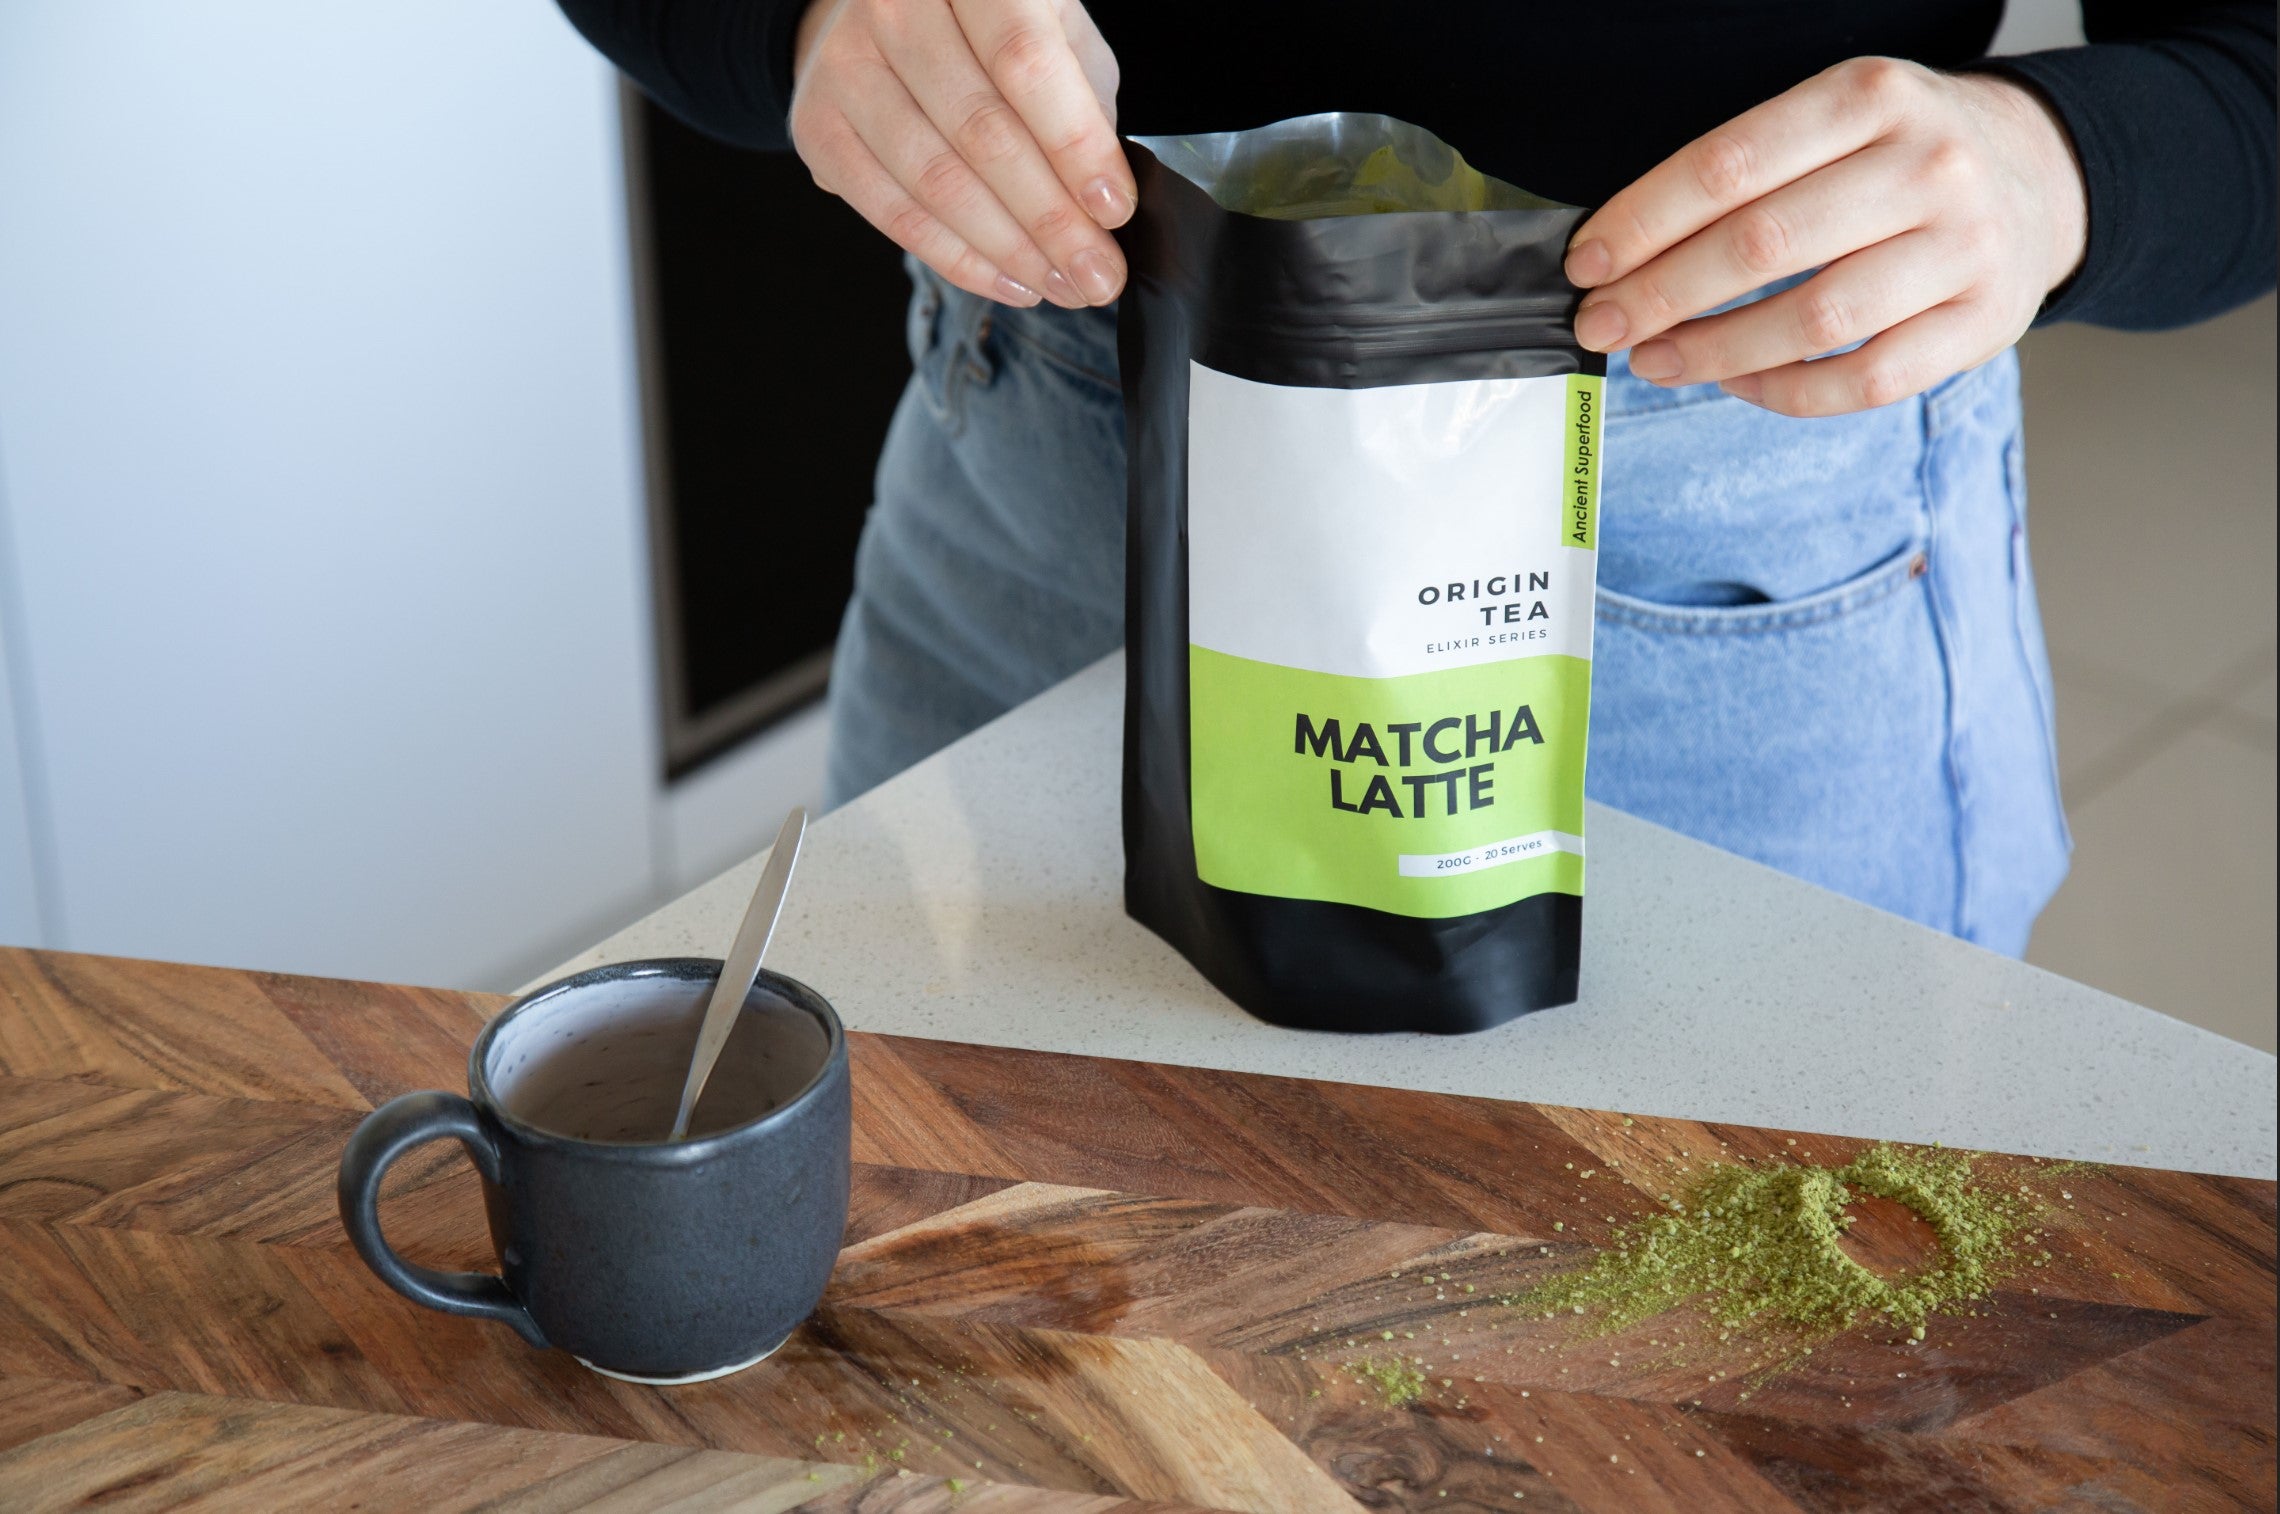 Health Benefits of Matcha Tea - Matcha Source